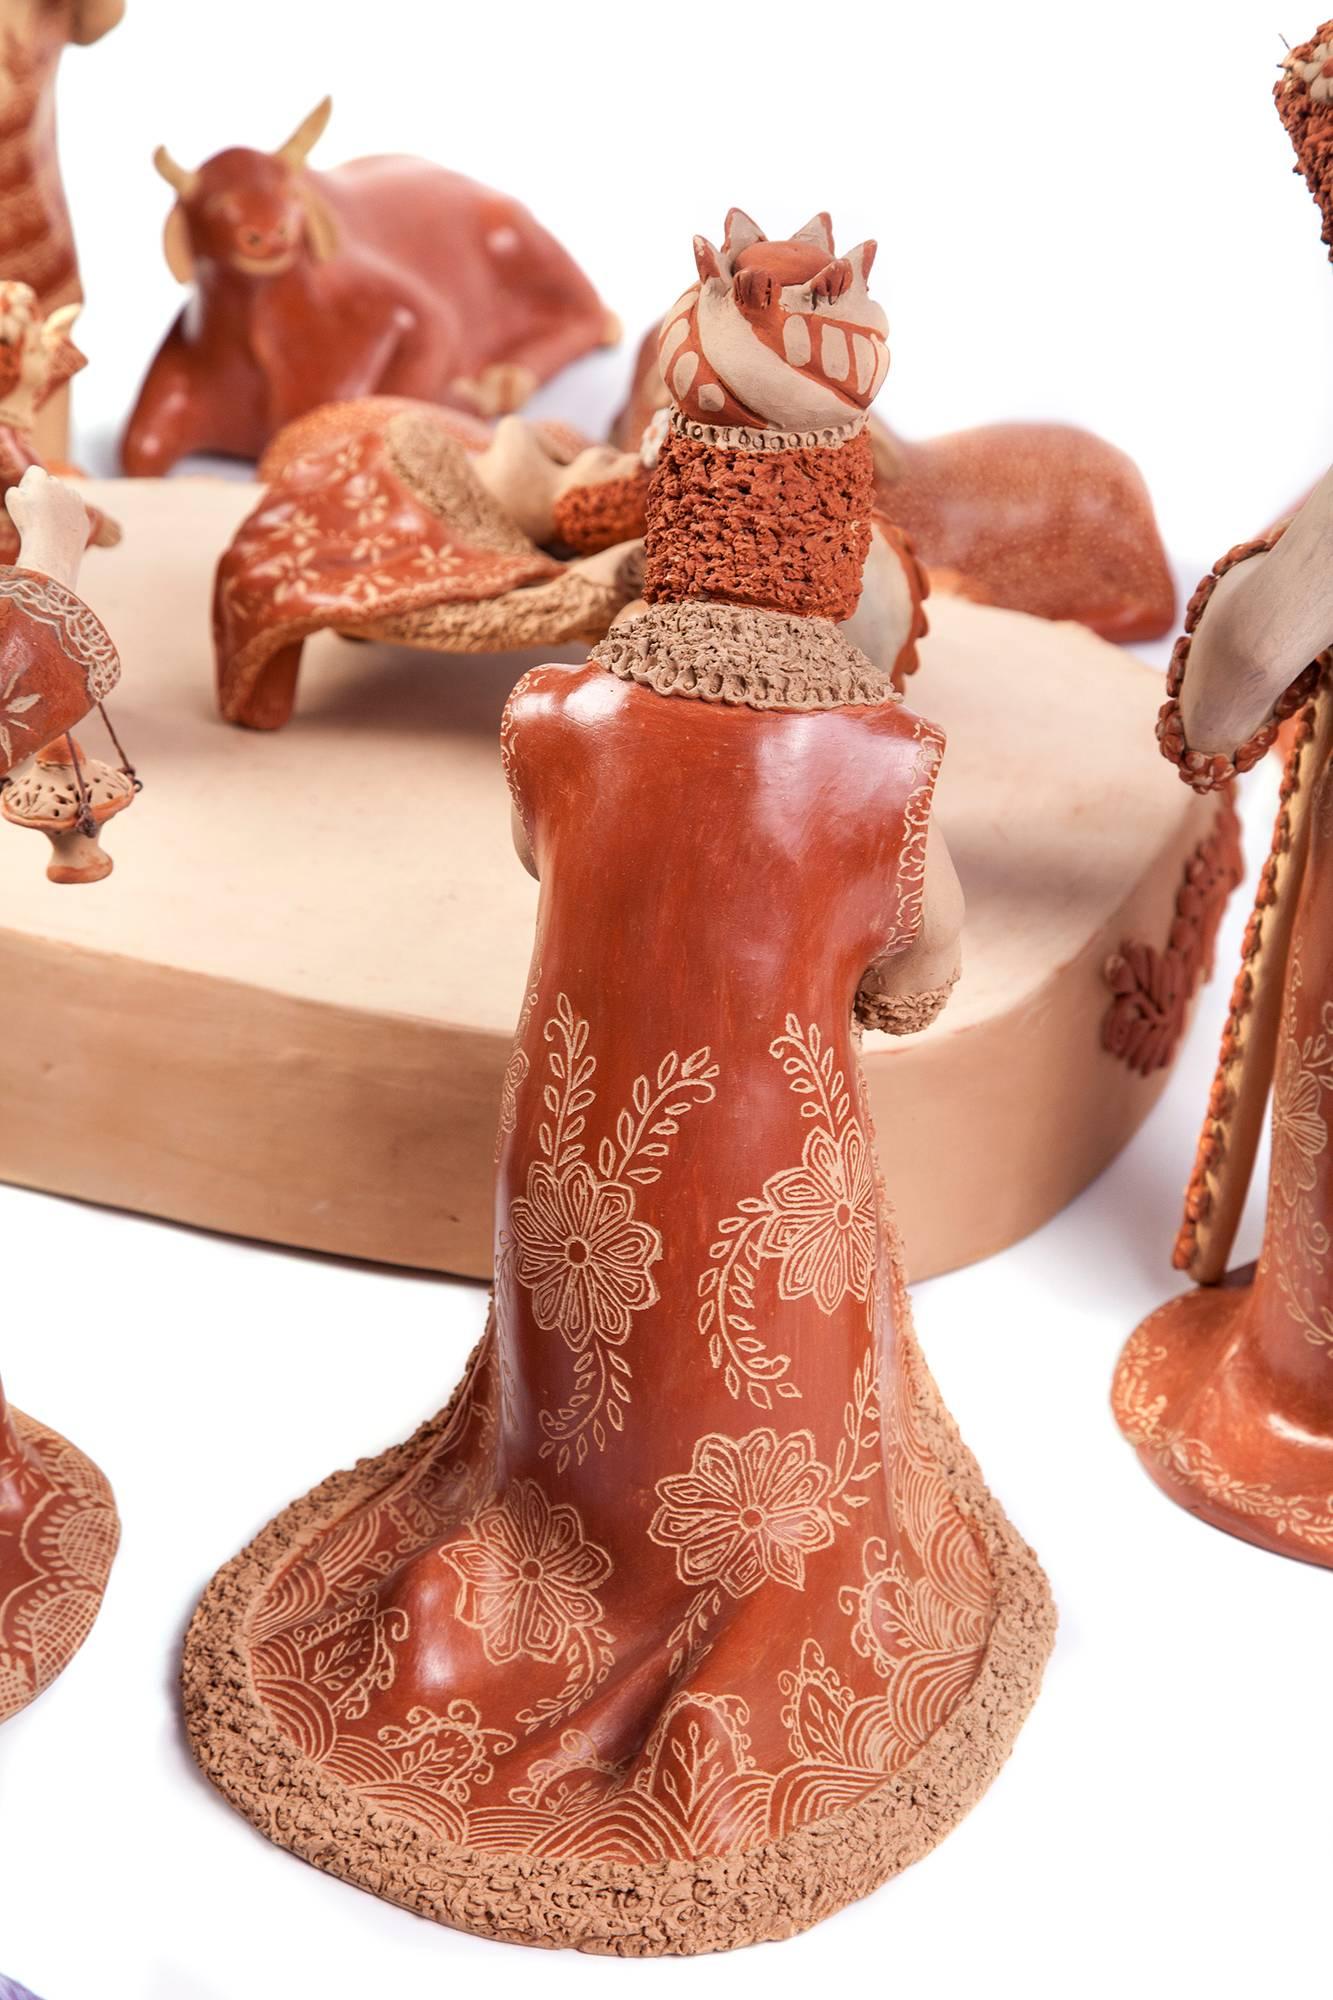 Nacimiento de Barro / Ceramics Mexican Folk Art Clay Nativity 8